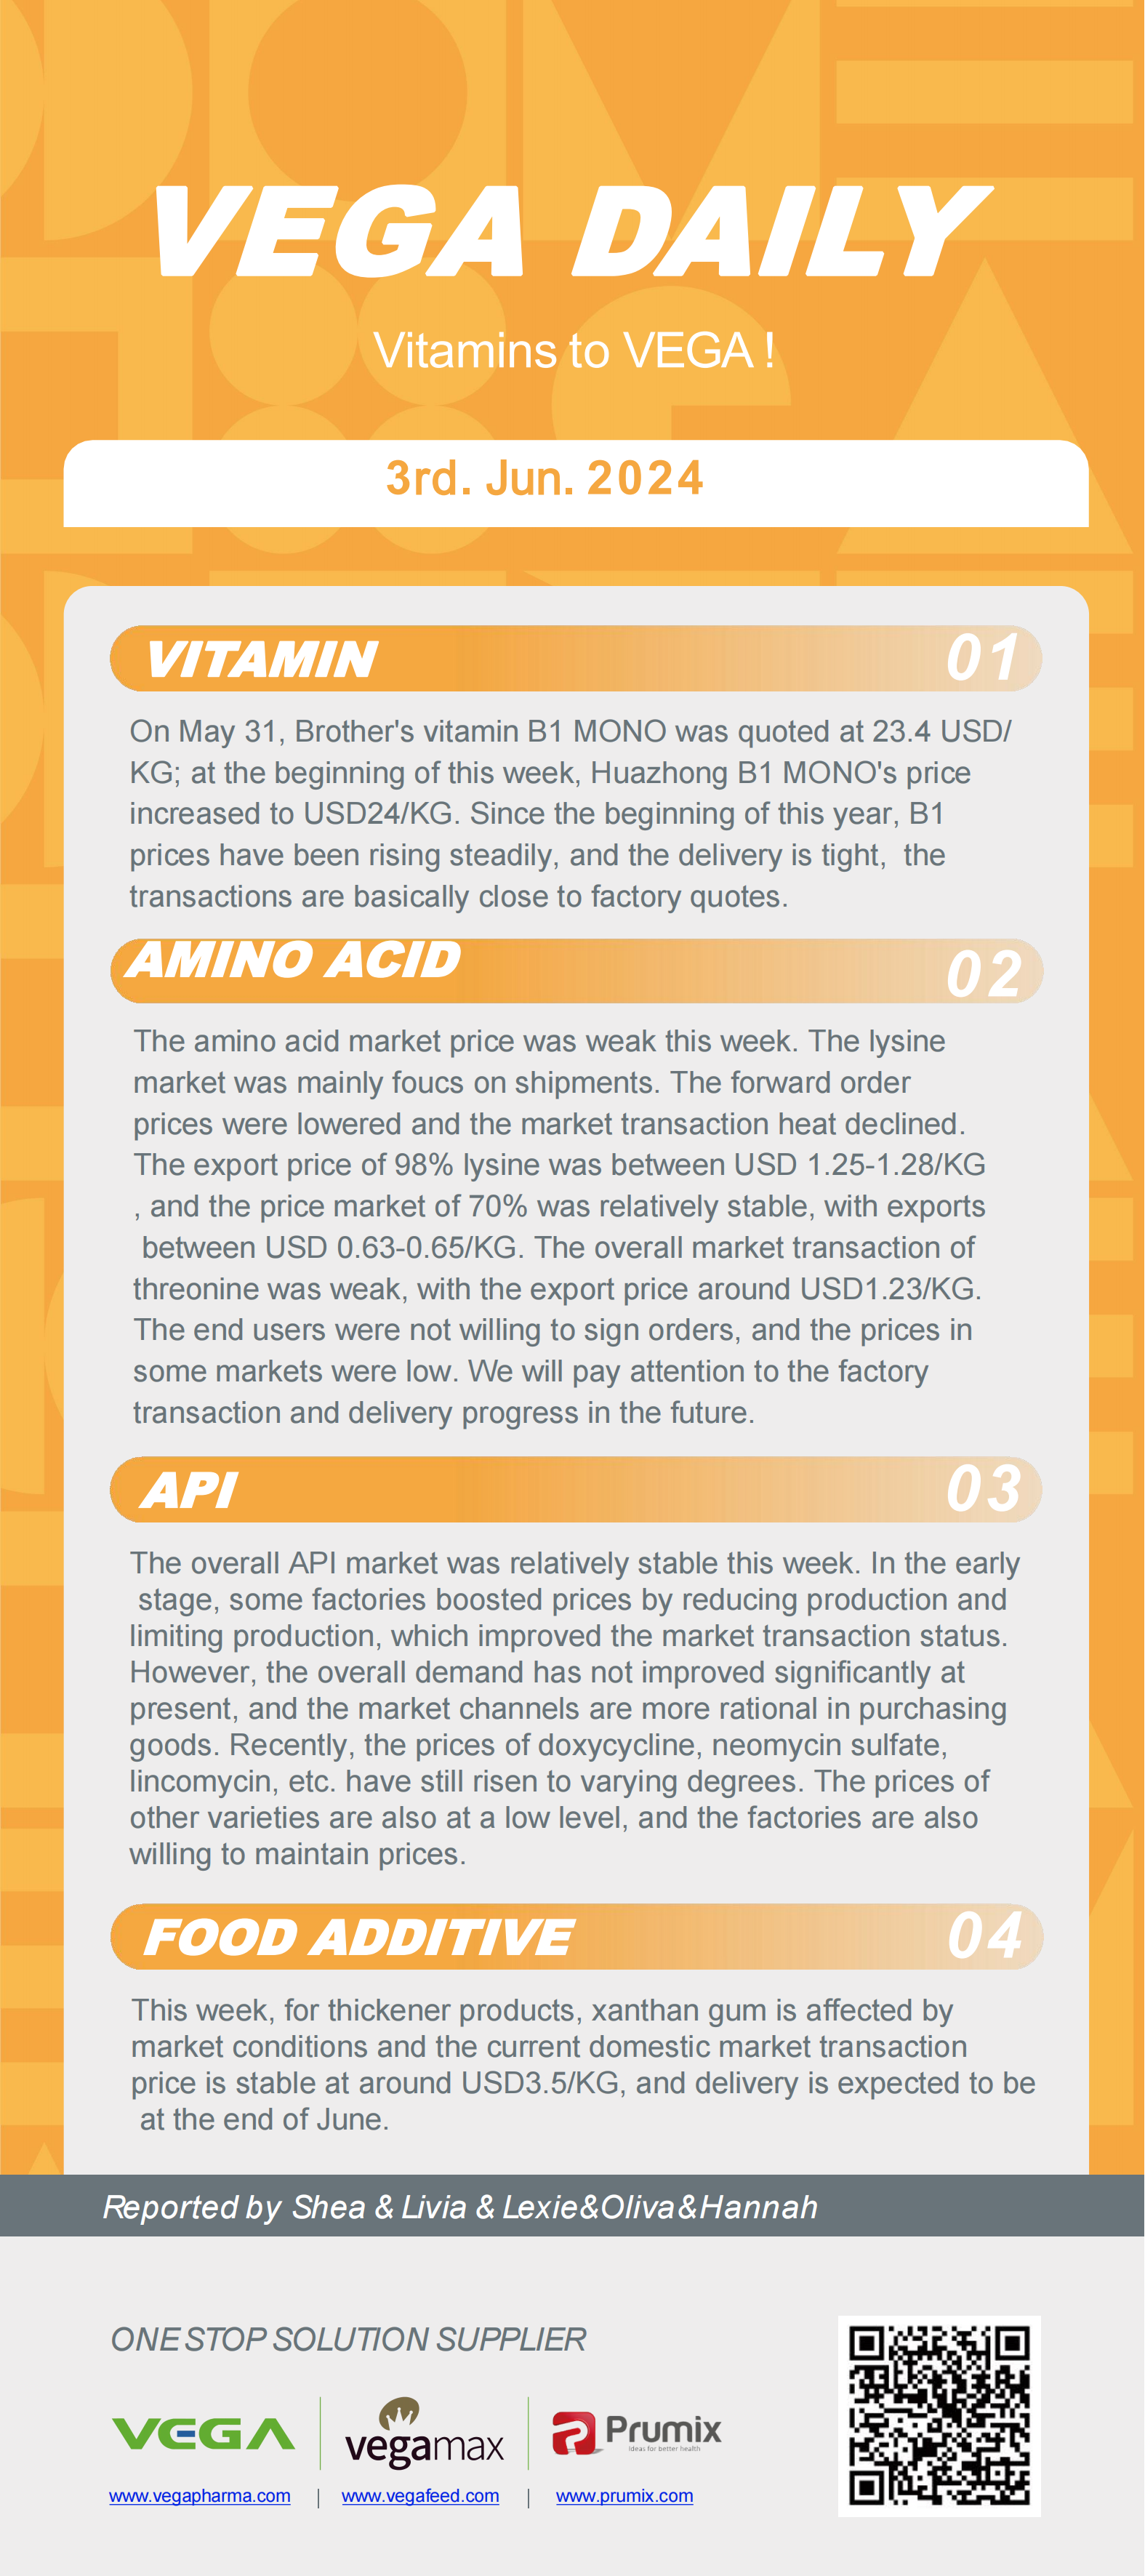 Vega Daily Dated on Jun 3rd 2024 Vitamin Amino Acid APl Food Additives.png